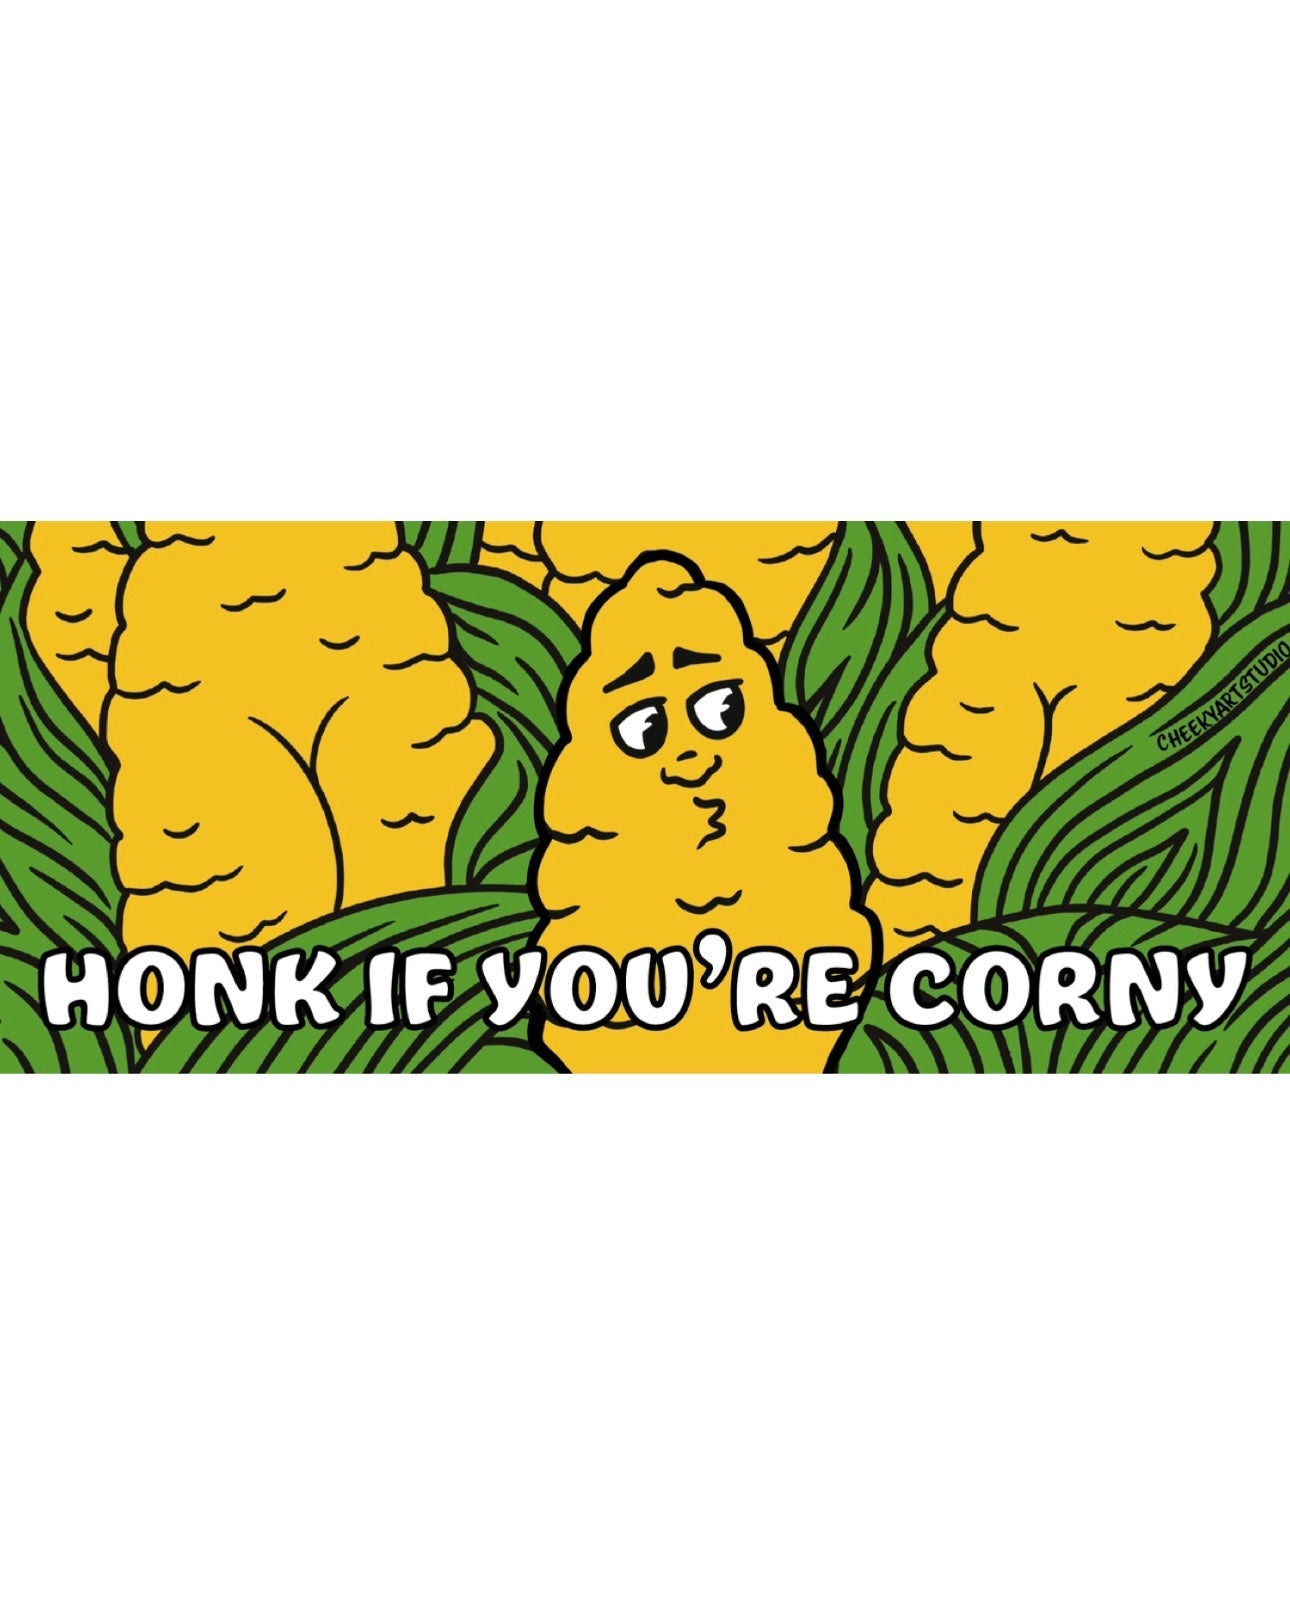 Honk If You’re Corny Bumper Sticker - Cheeky Art Studio-bumper sticker-Corn-honk